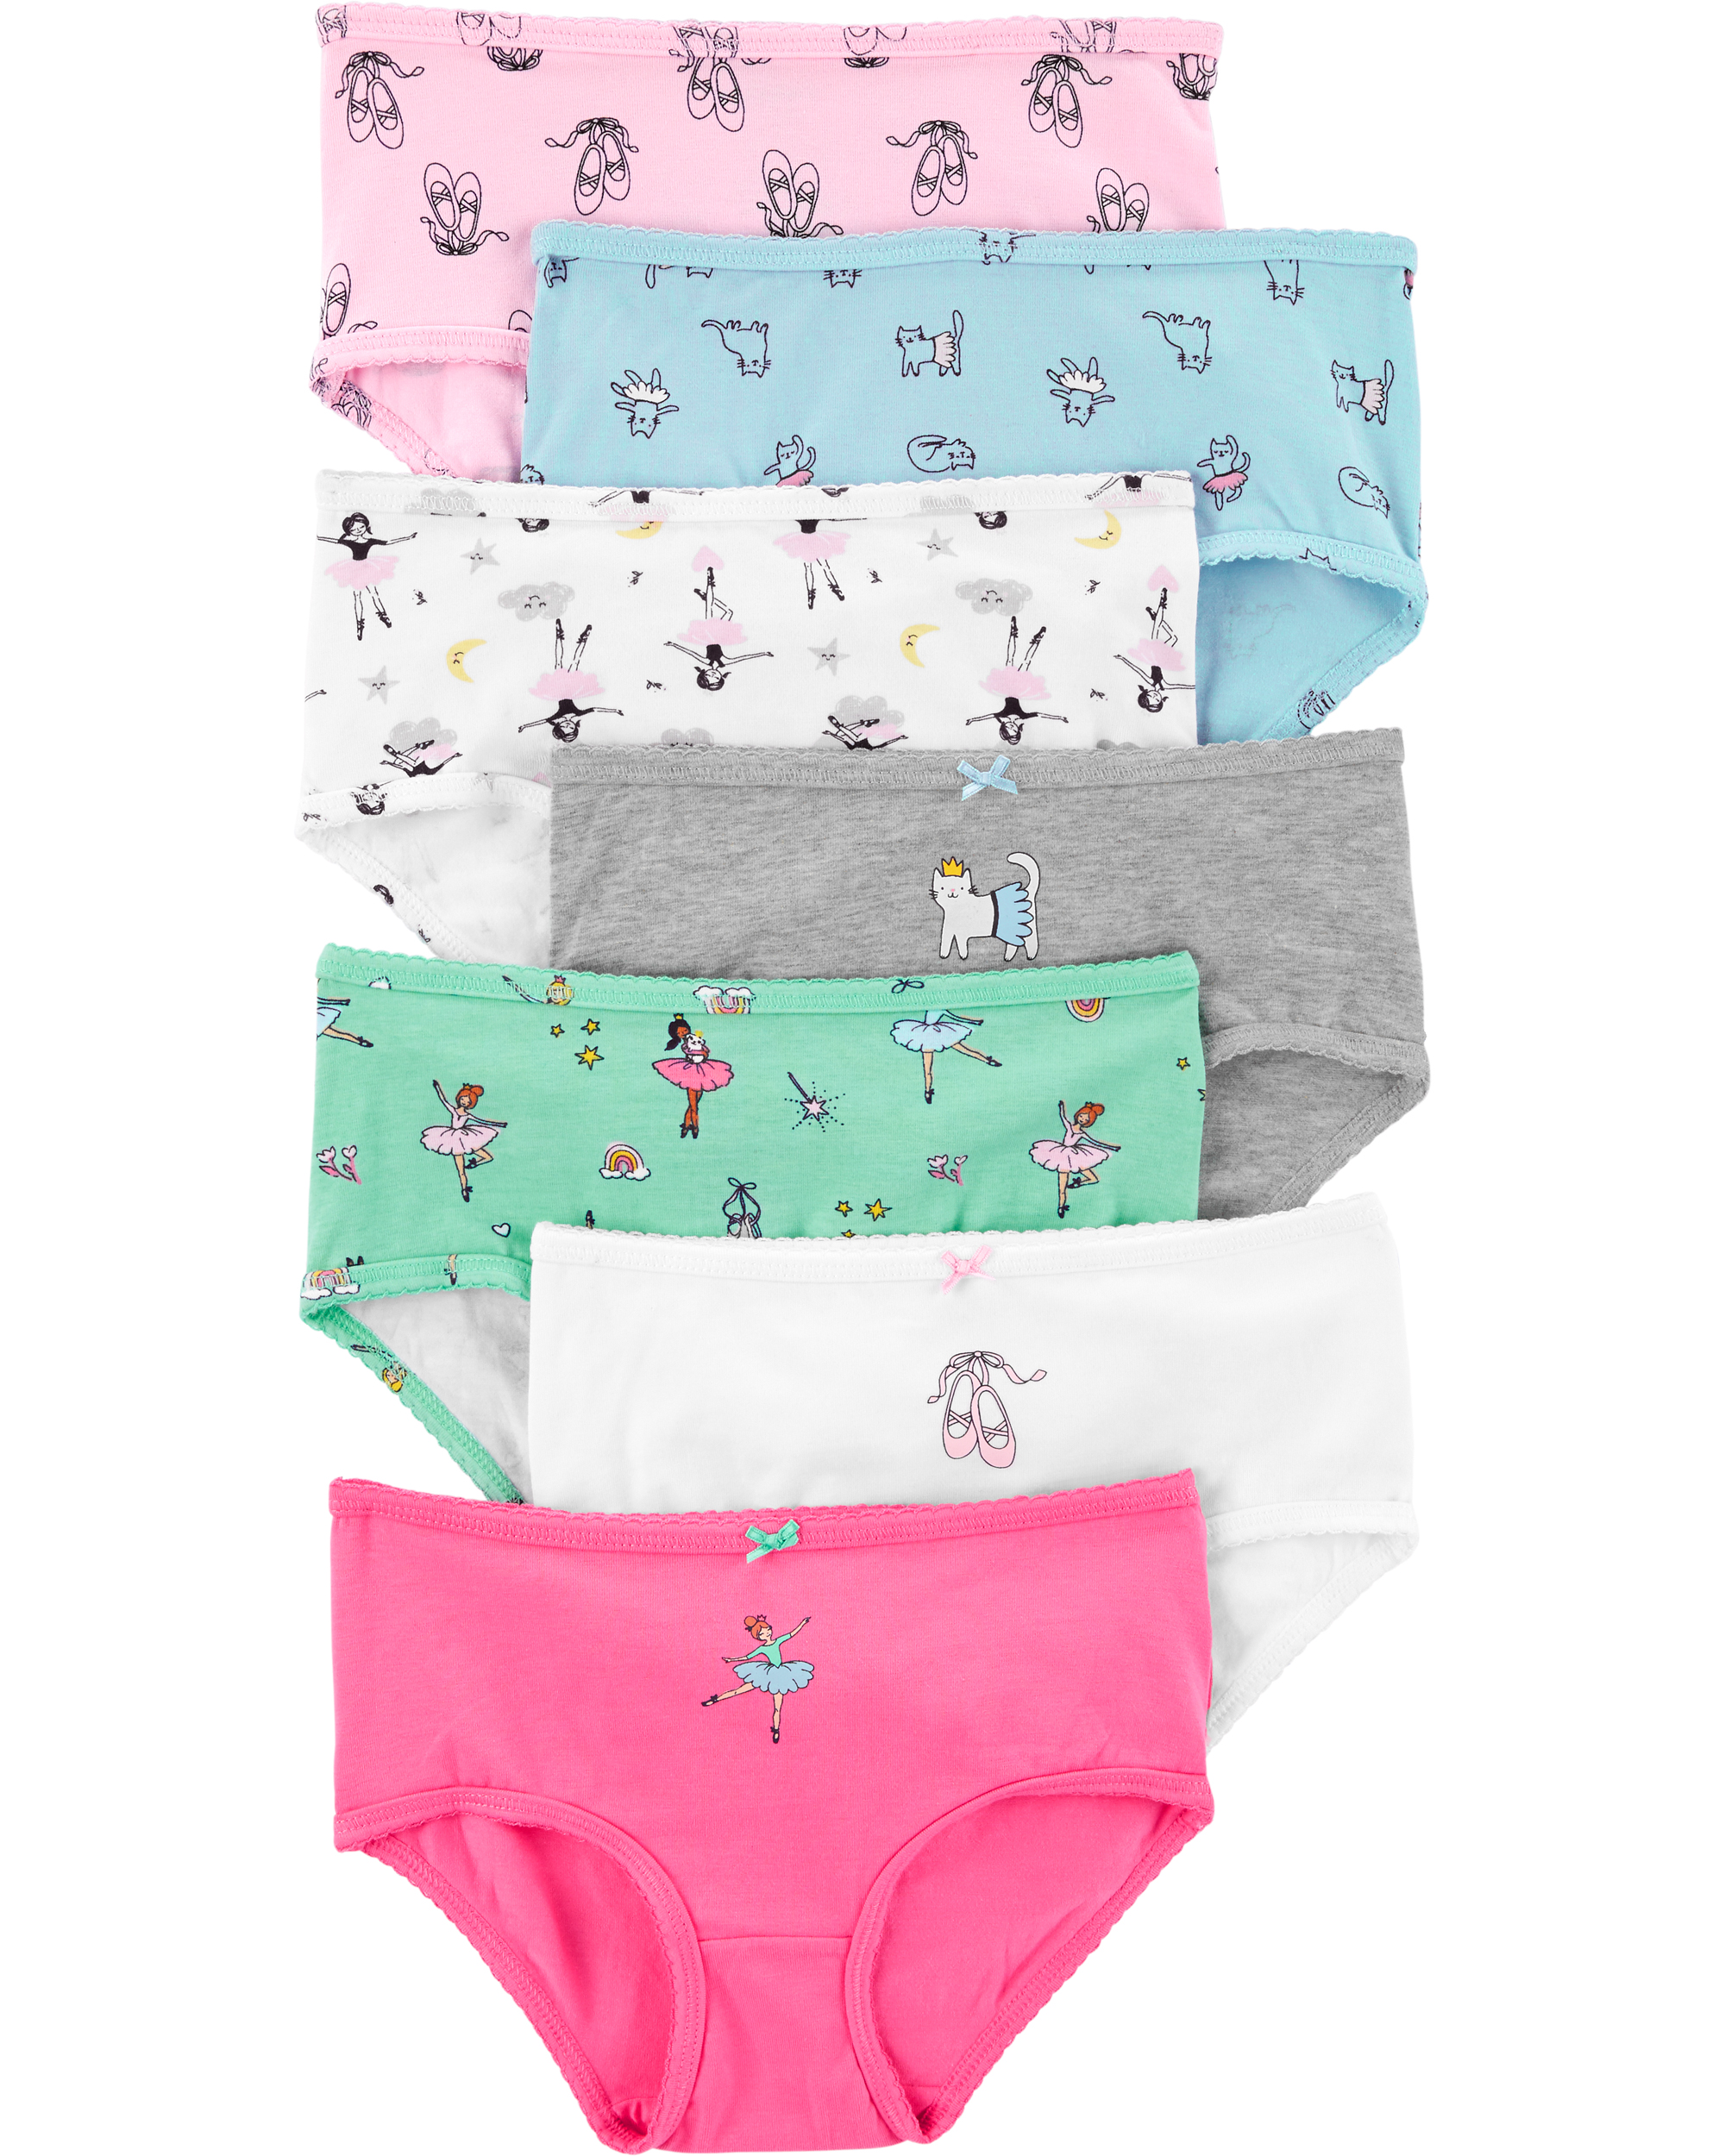 7 PACK Assorted Miraculous Girls Panties Multicolor Underwear Briefs Size 6  NWOT